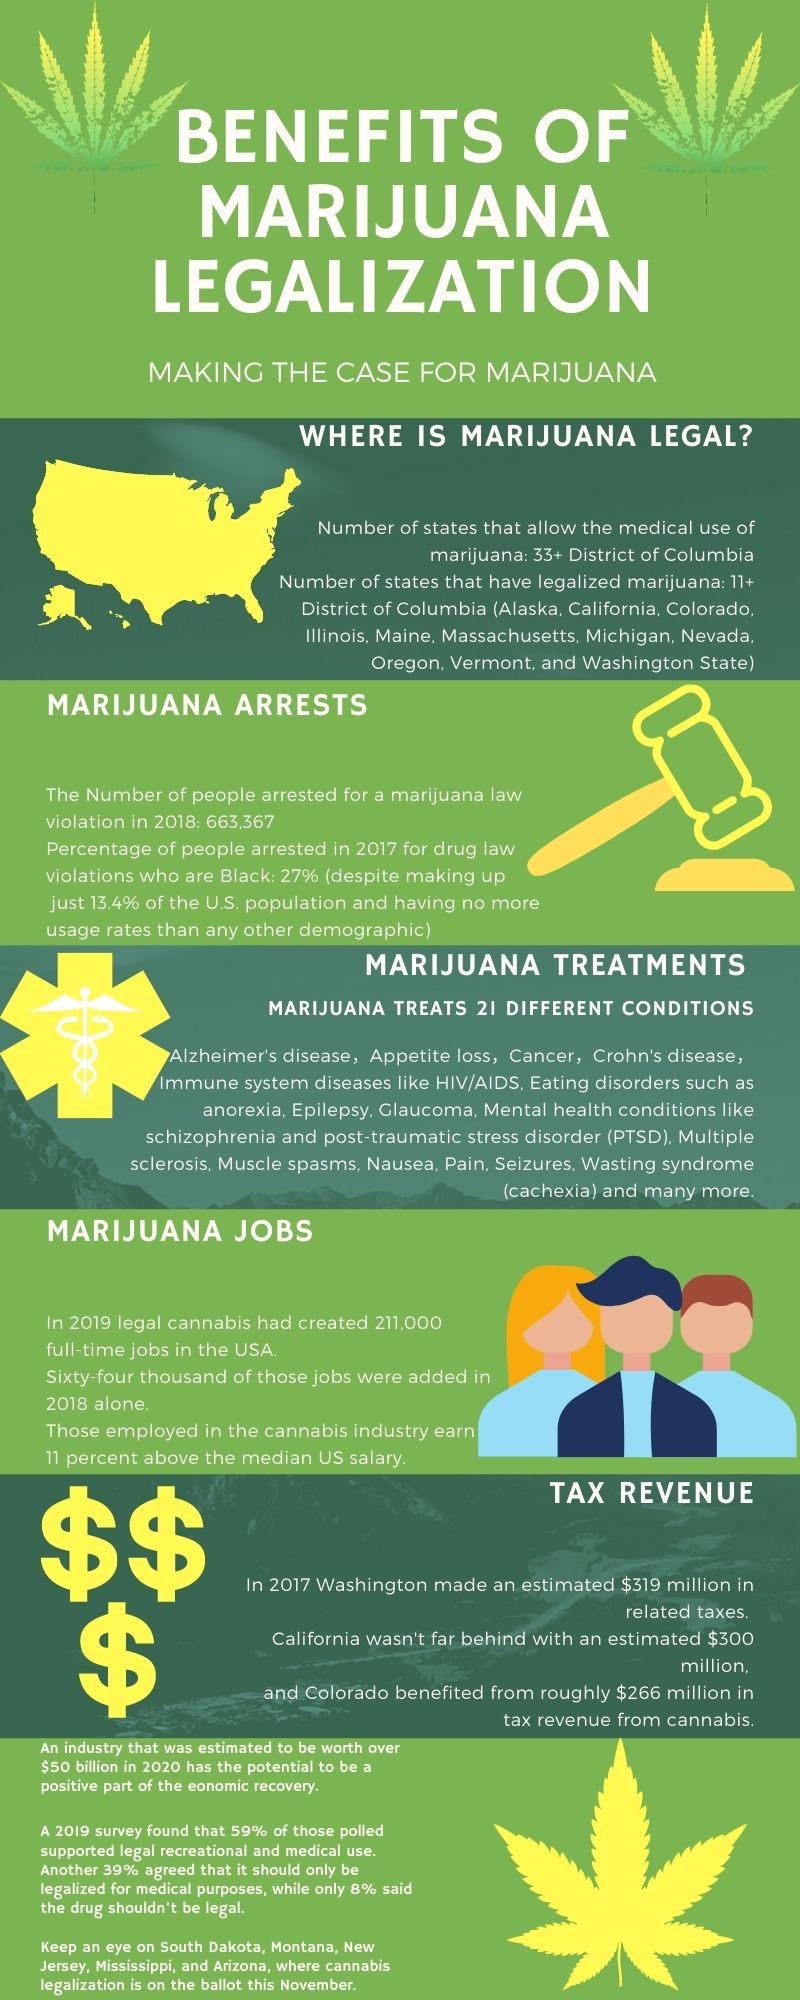 why medical marijuanas should be legal essay